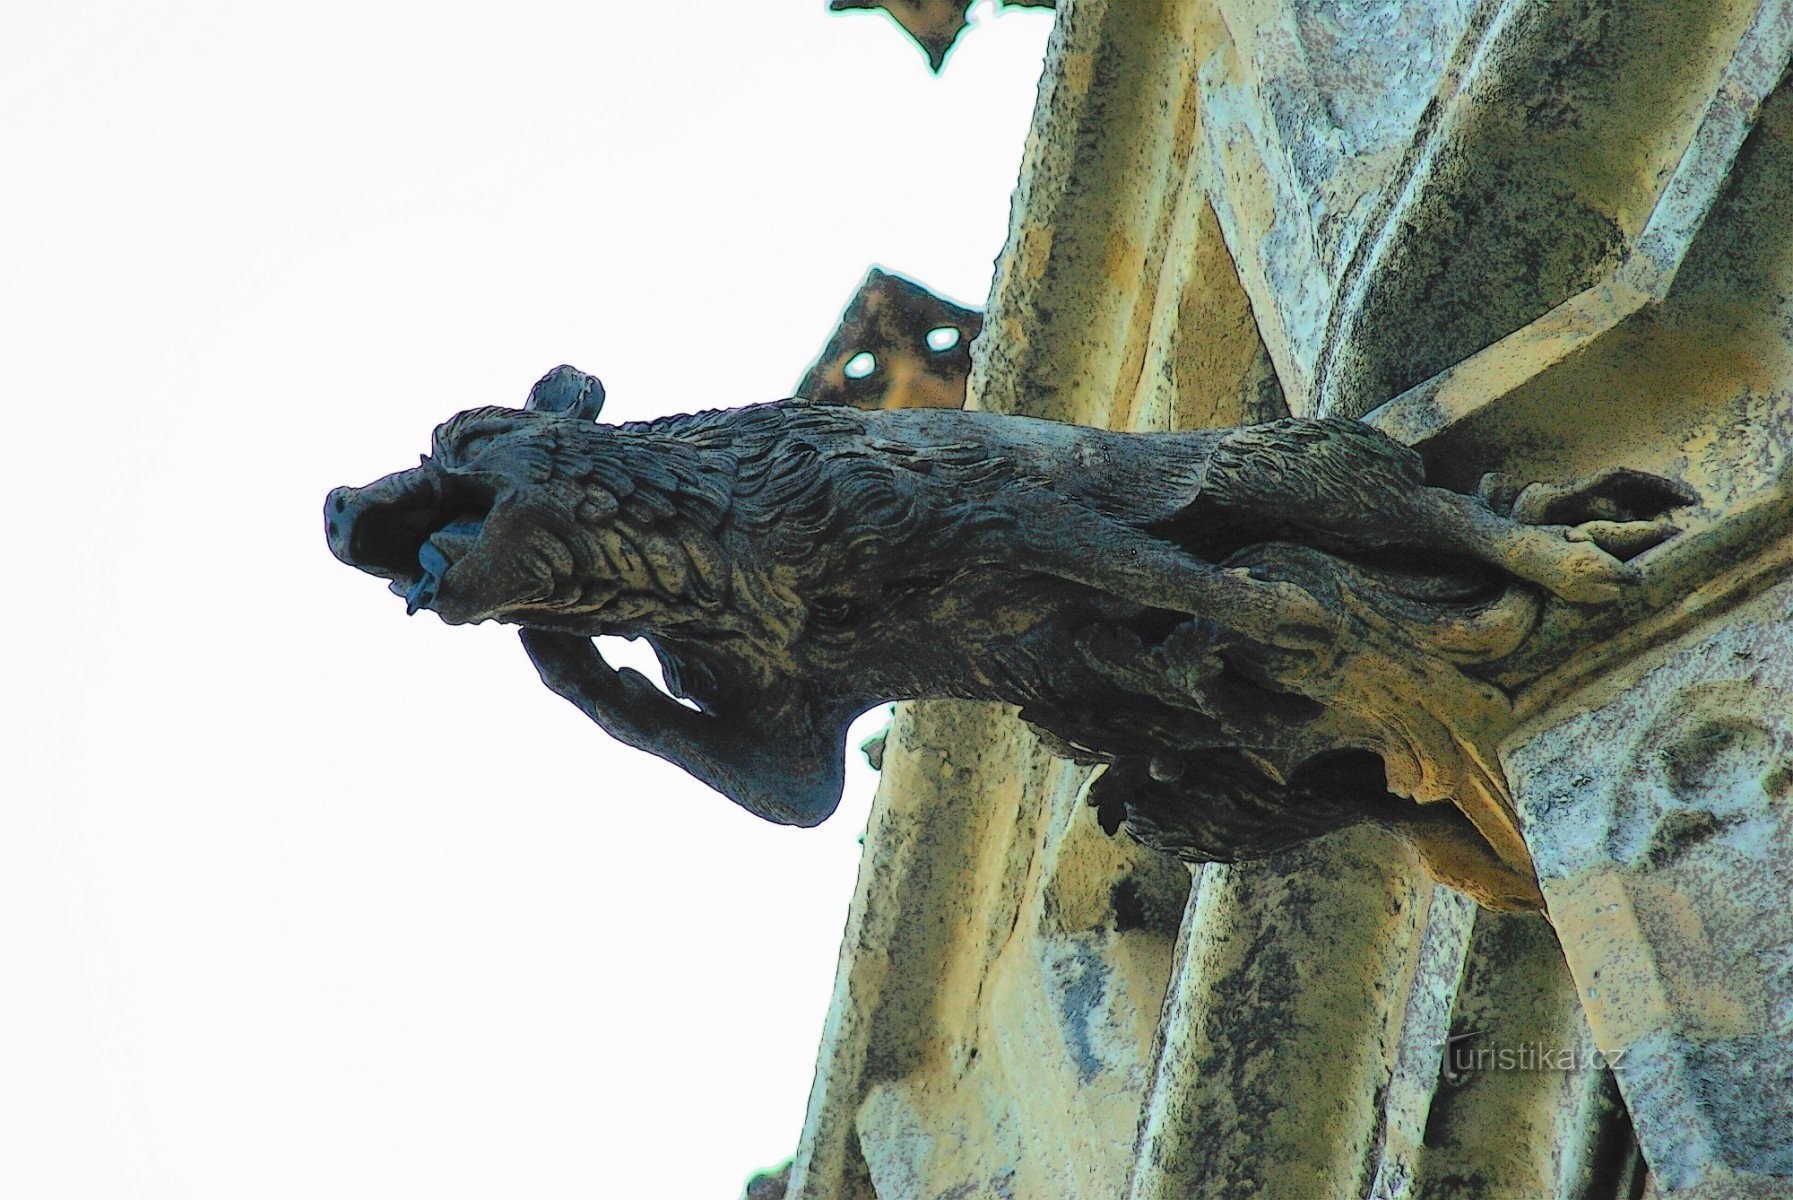 Kutná Hora – gárgulas de pedra no templo de St. Bárbara